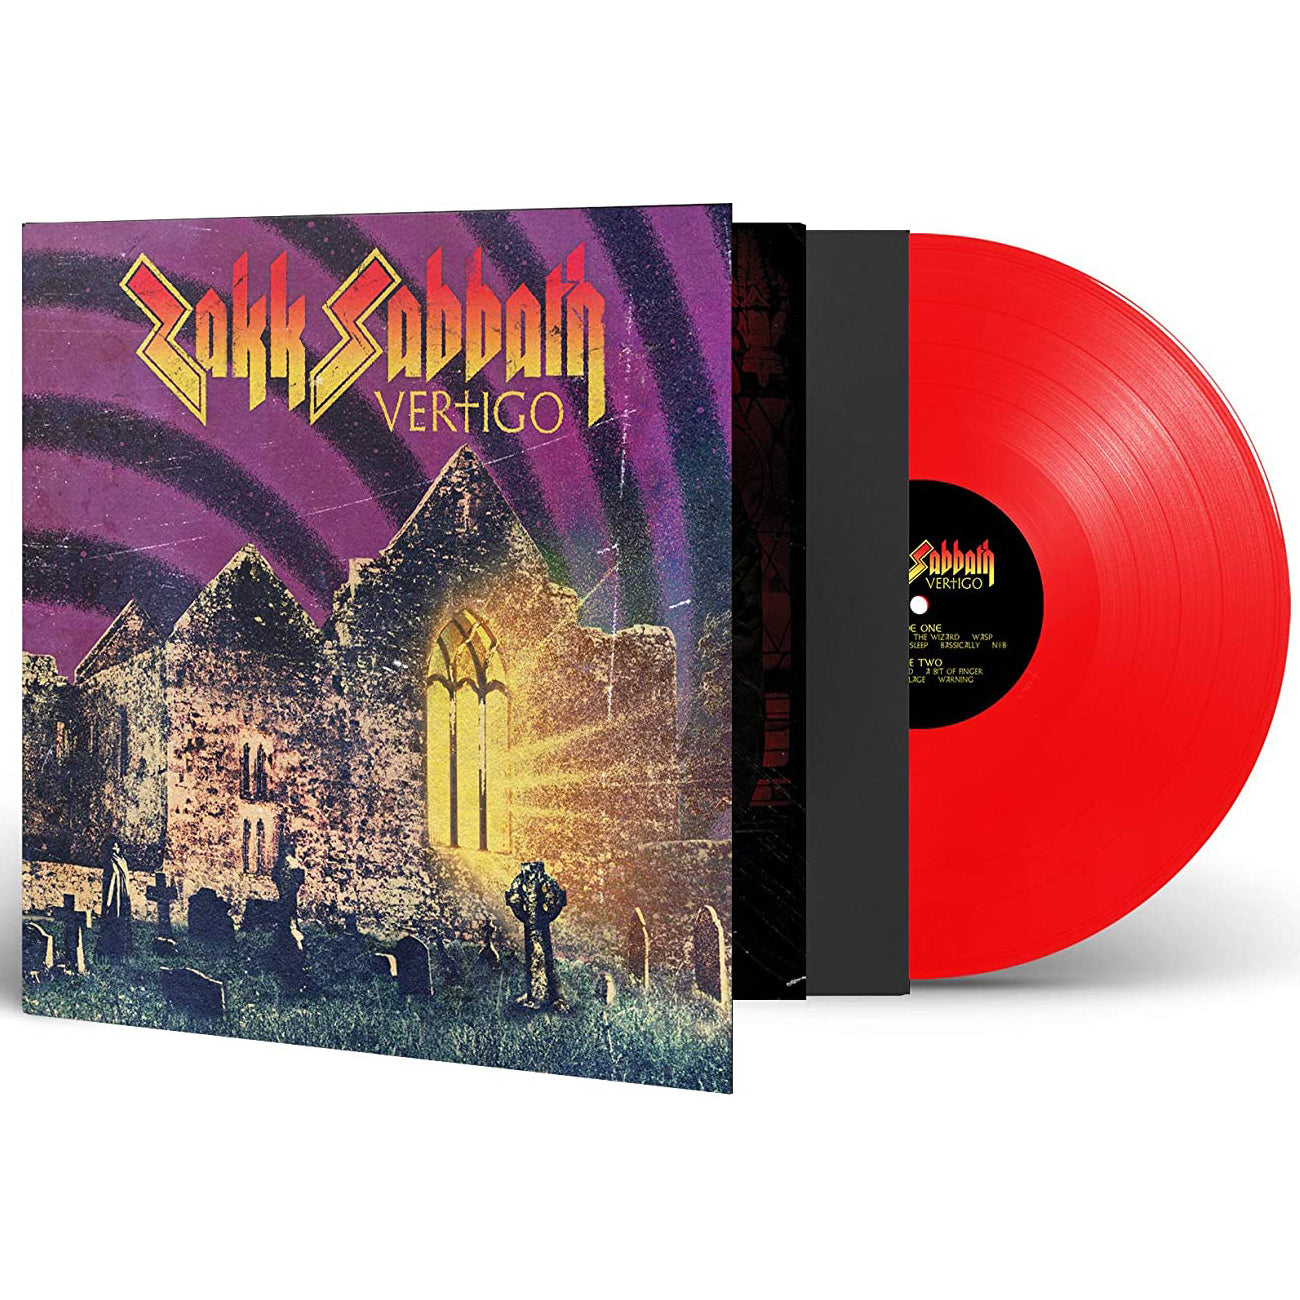 Zakk Sabbath "Vertigo" Red Vinyl